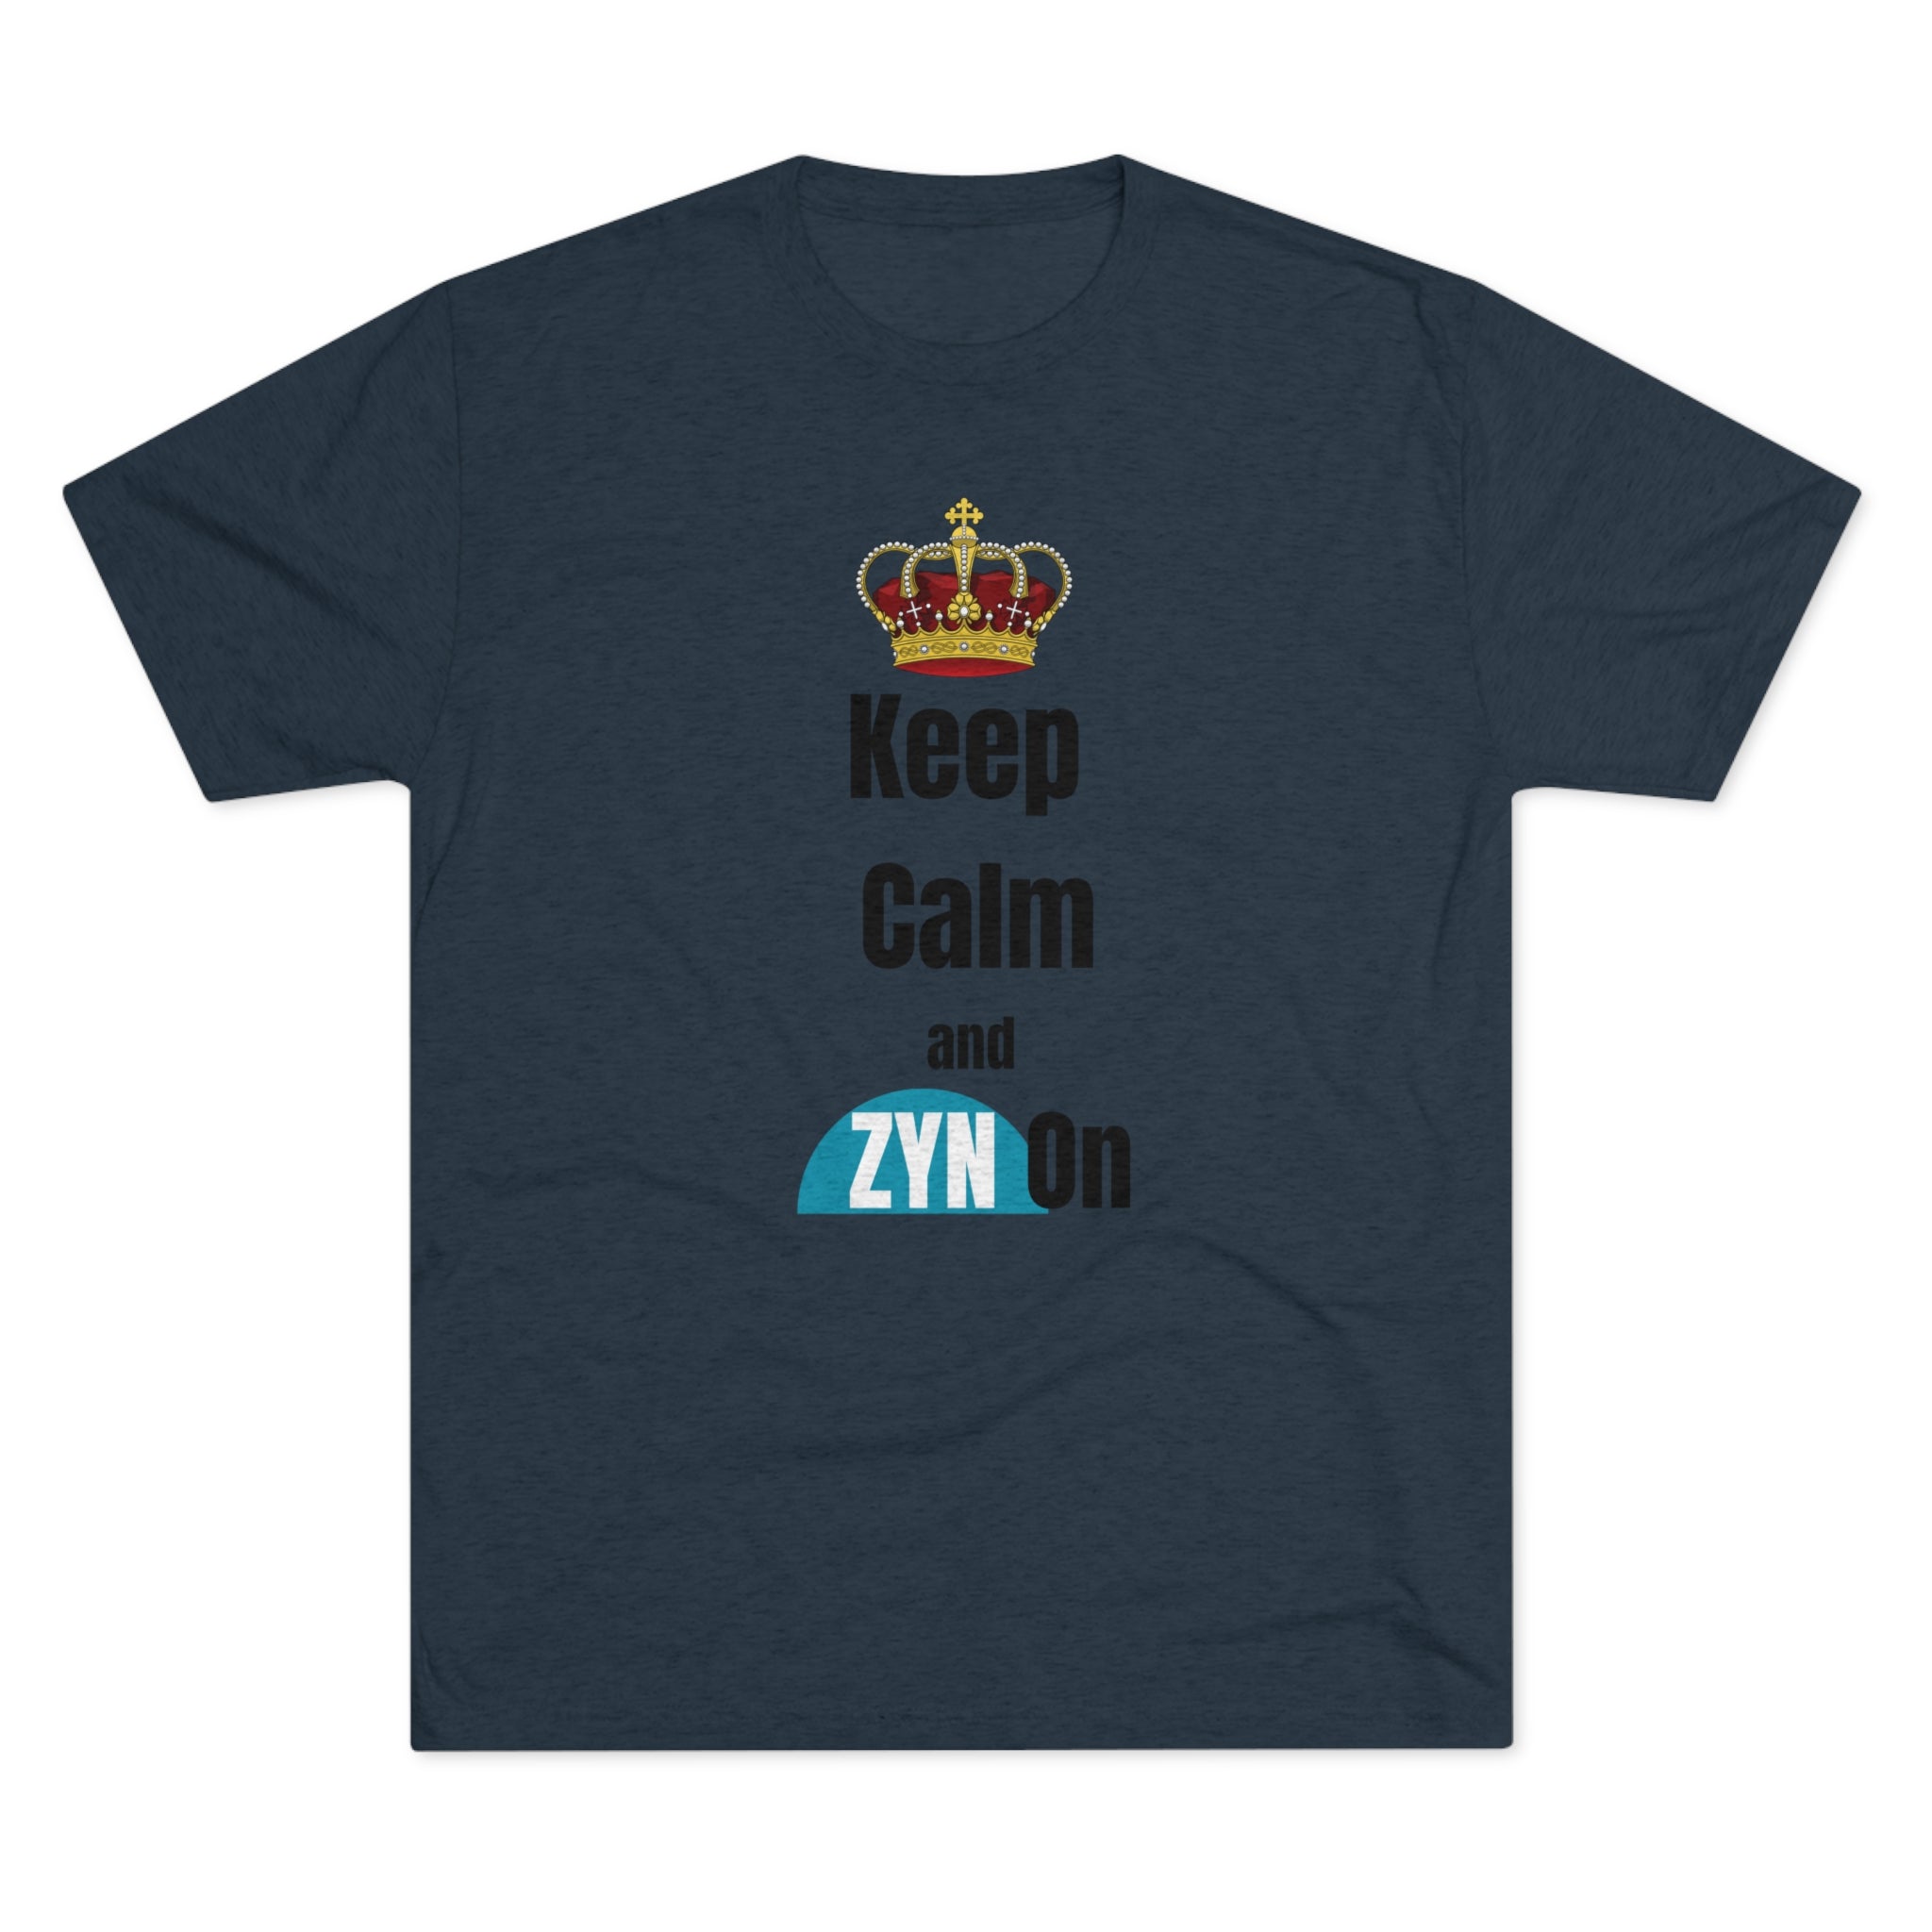 Keep Calm and ZYN on TEE